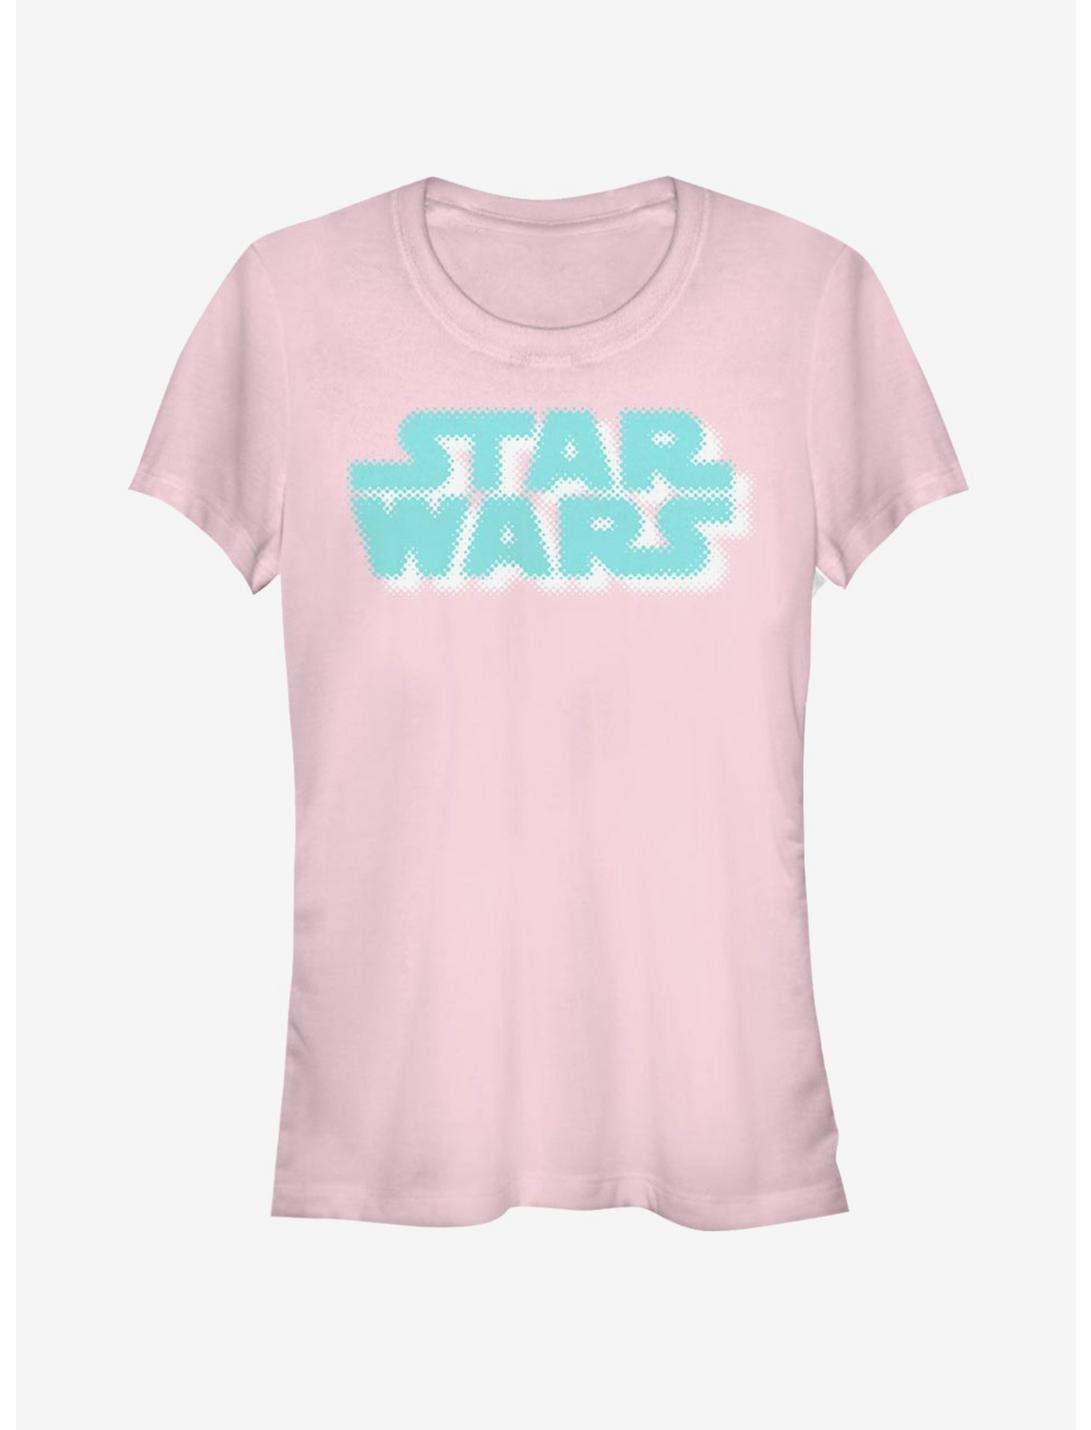 Star Wars Half Tone Logo  Girls T-Shirt, LIGHT PINK, hi-res